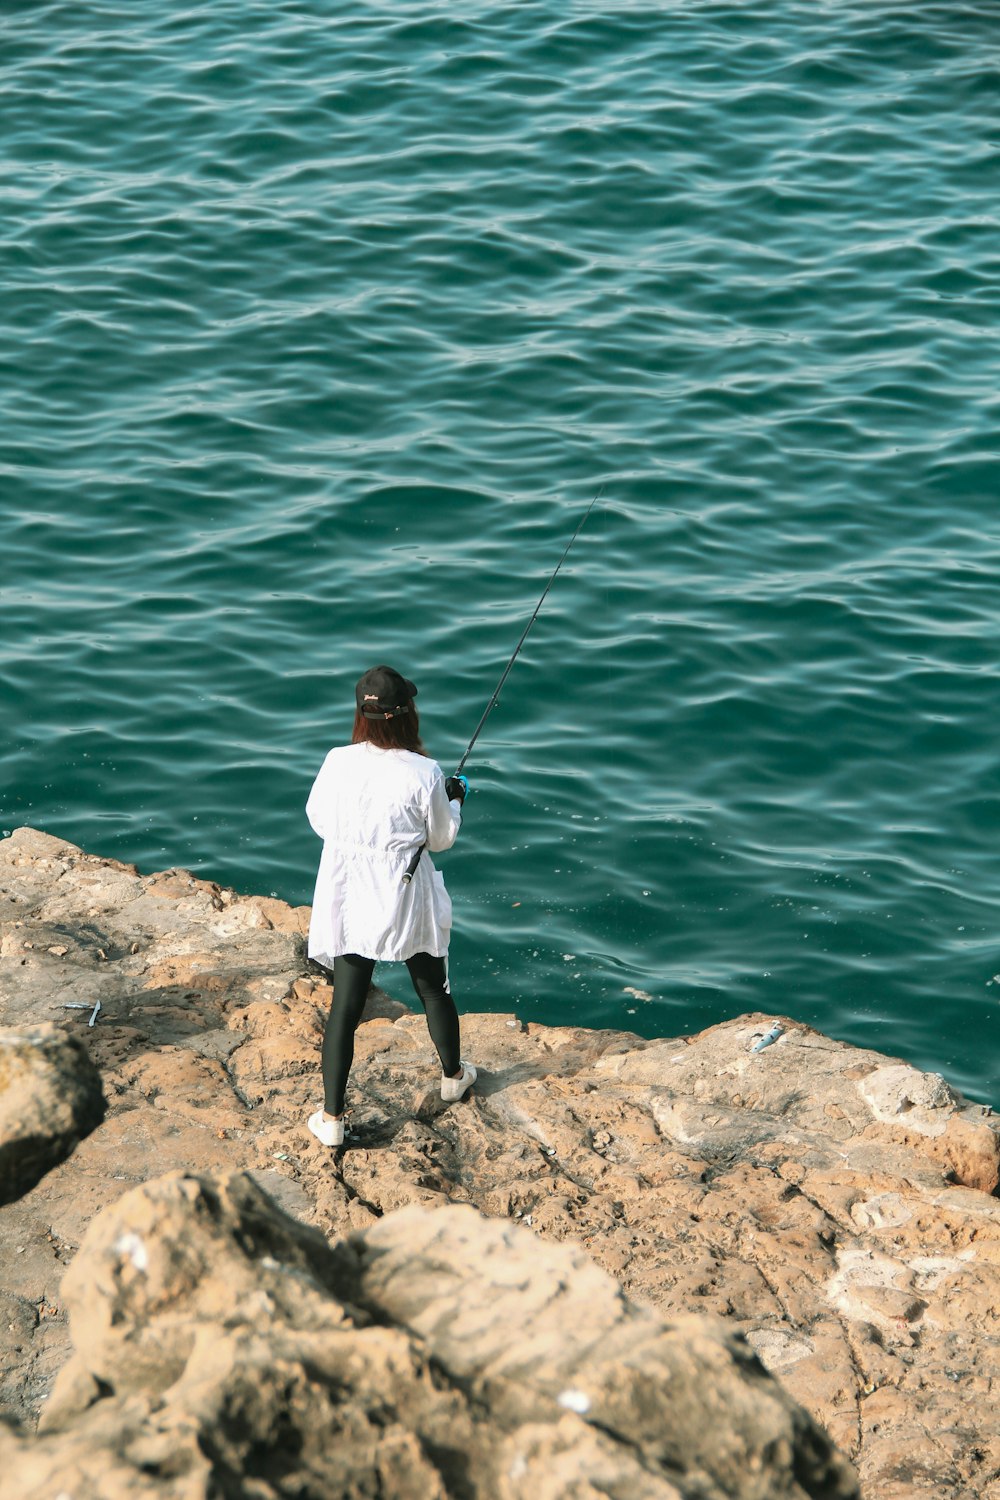 a man fishing on a rocky shore